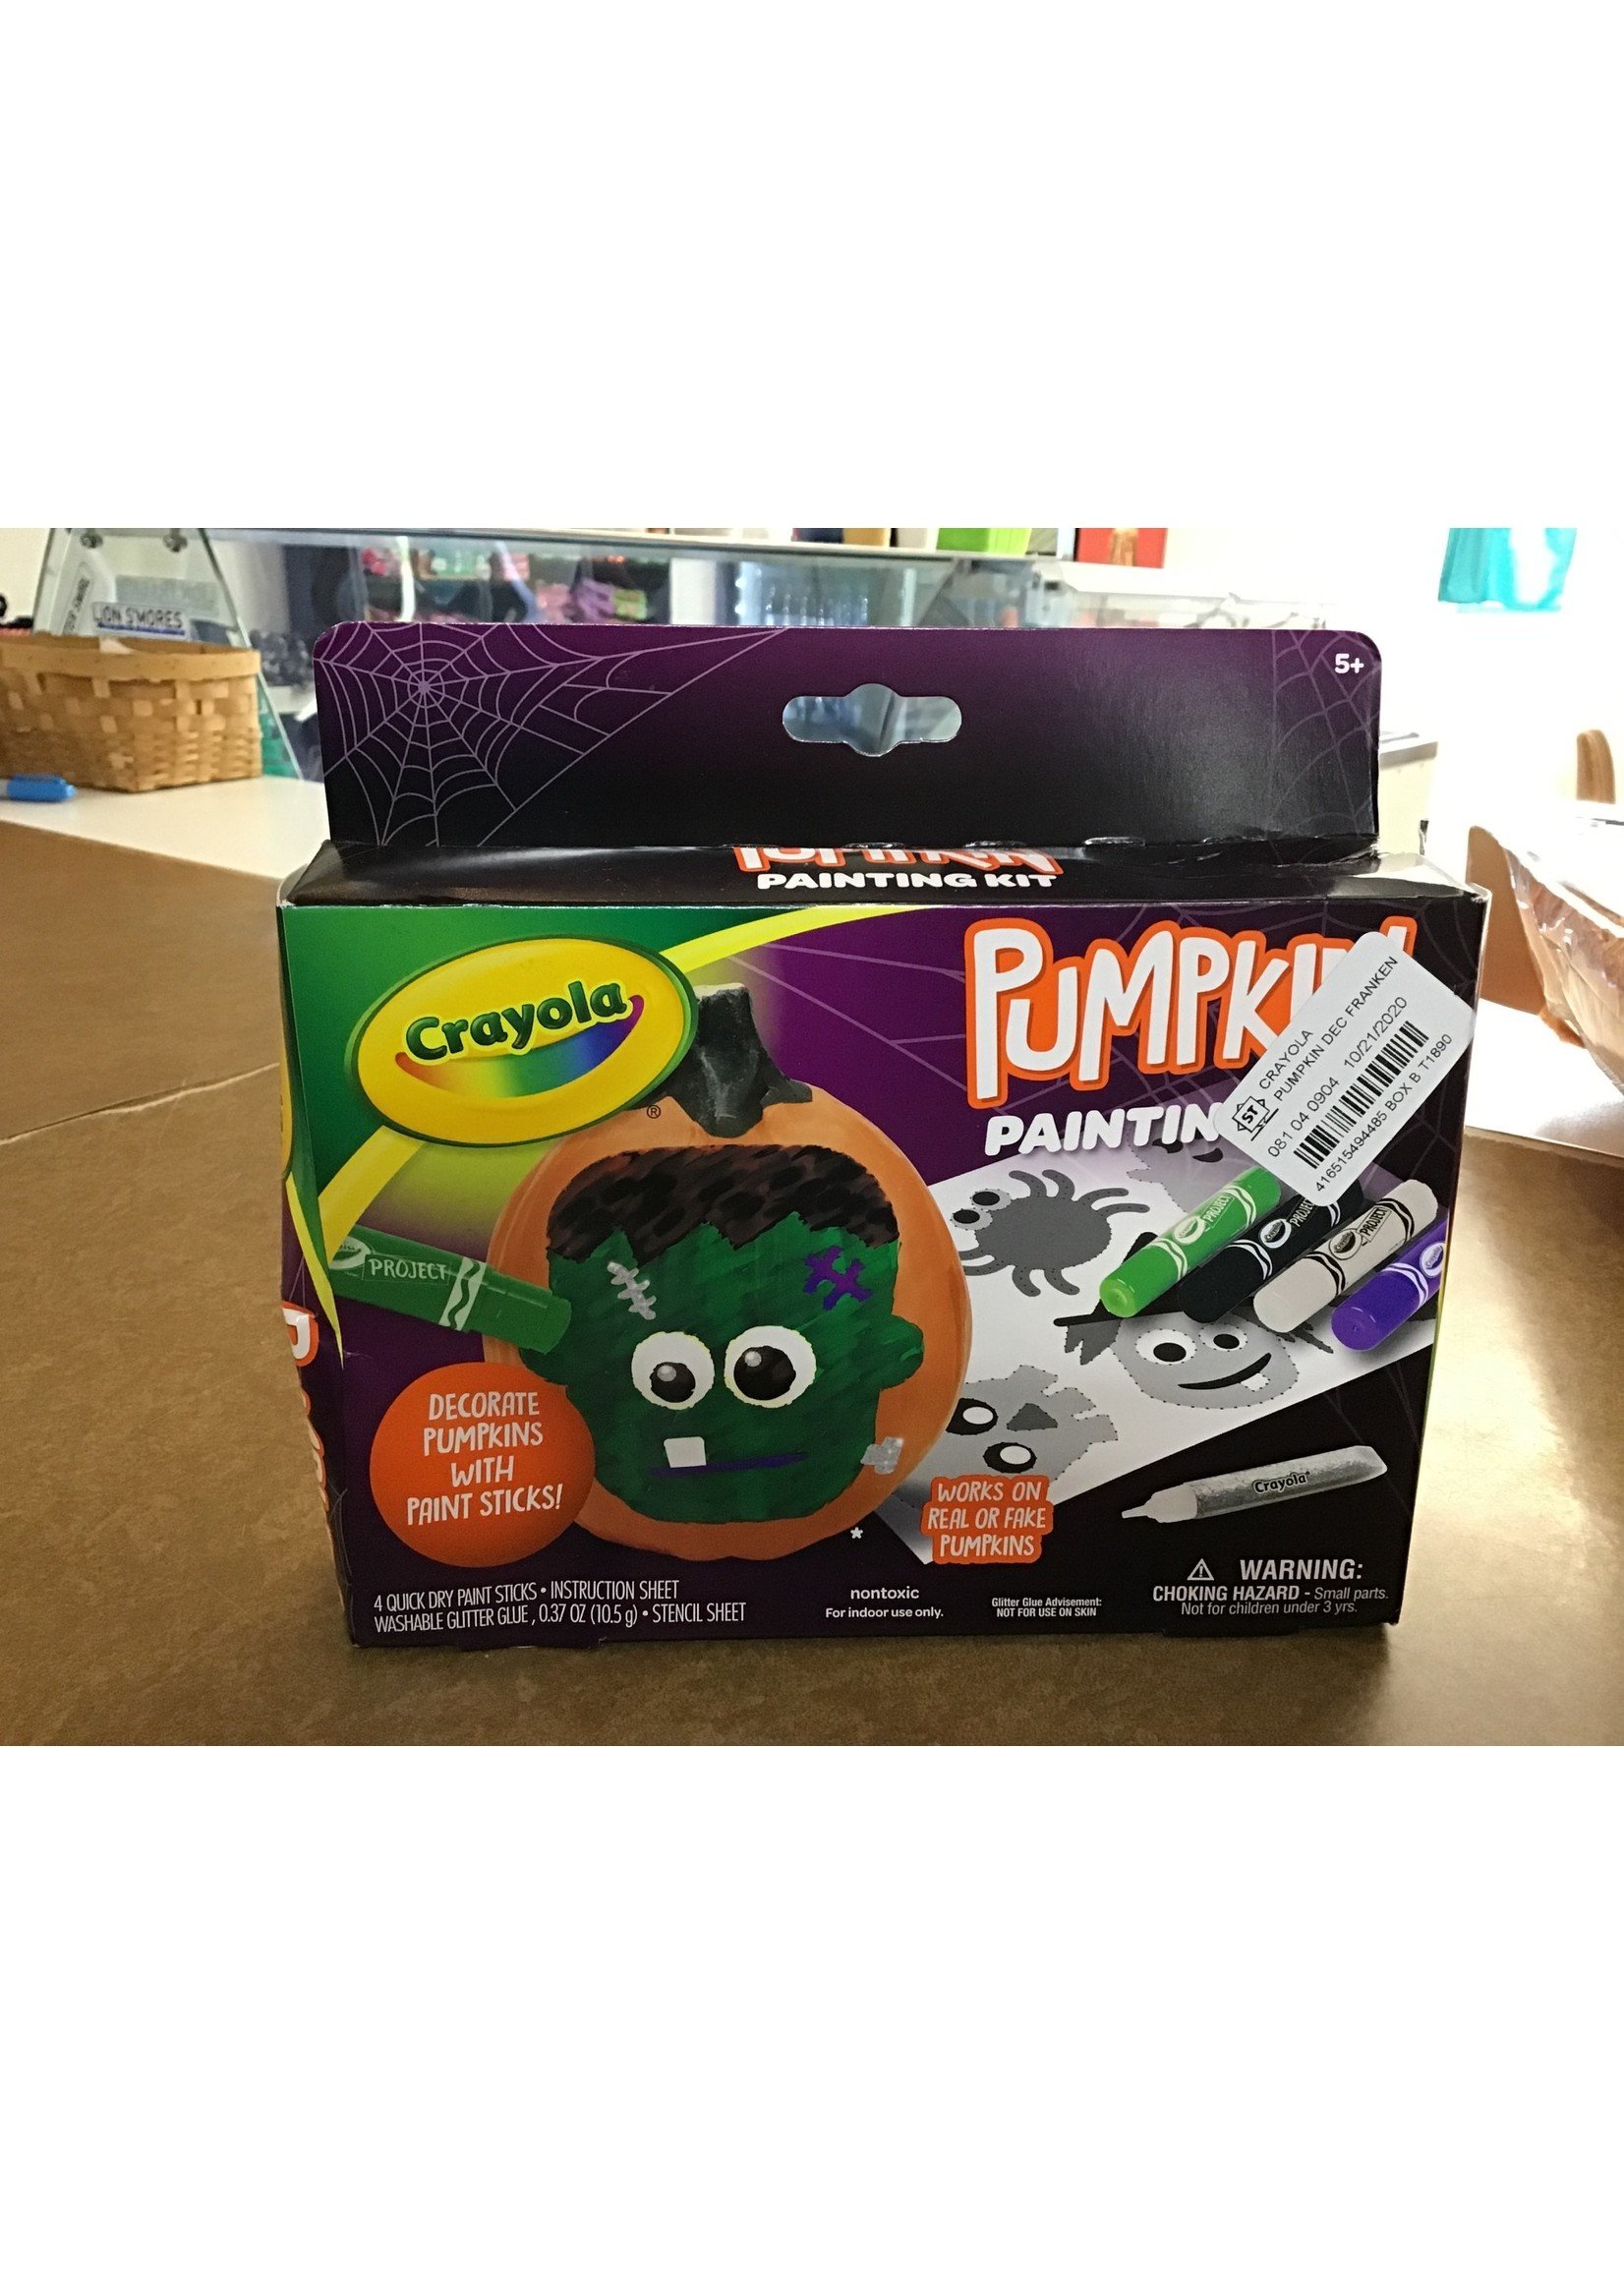 Pumpkin Painting Kit- open package